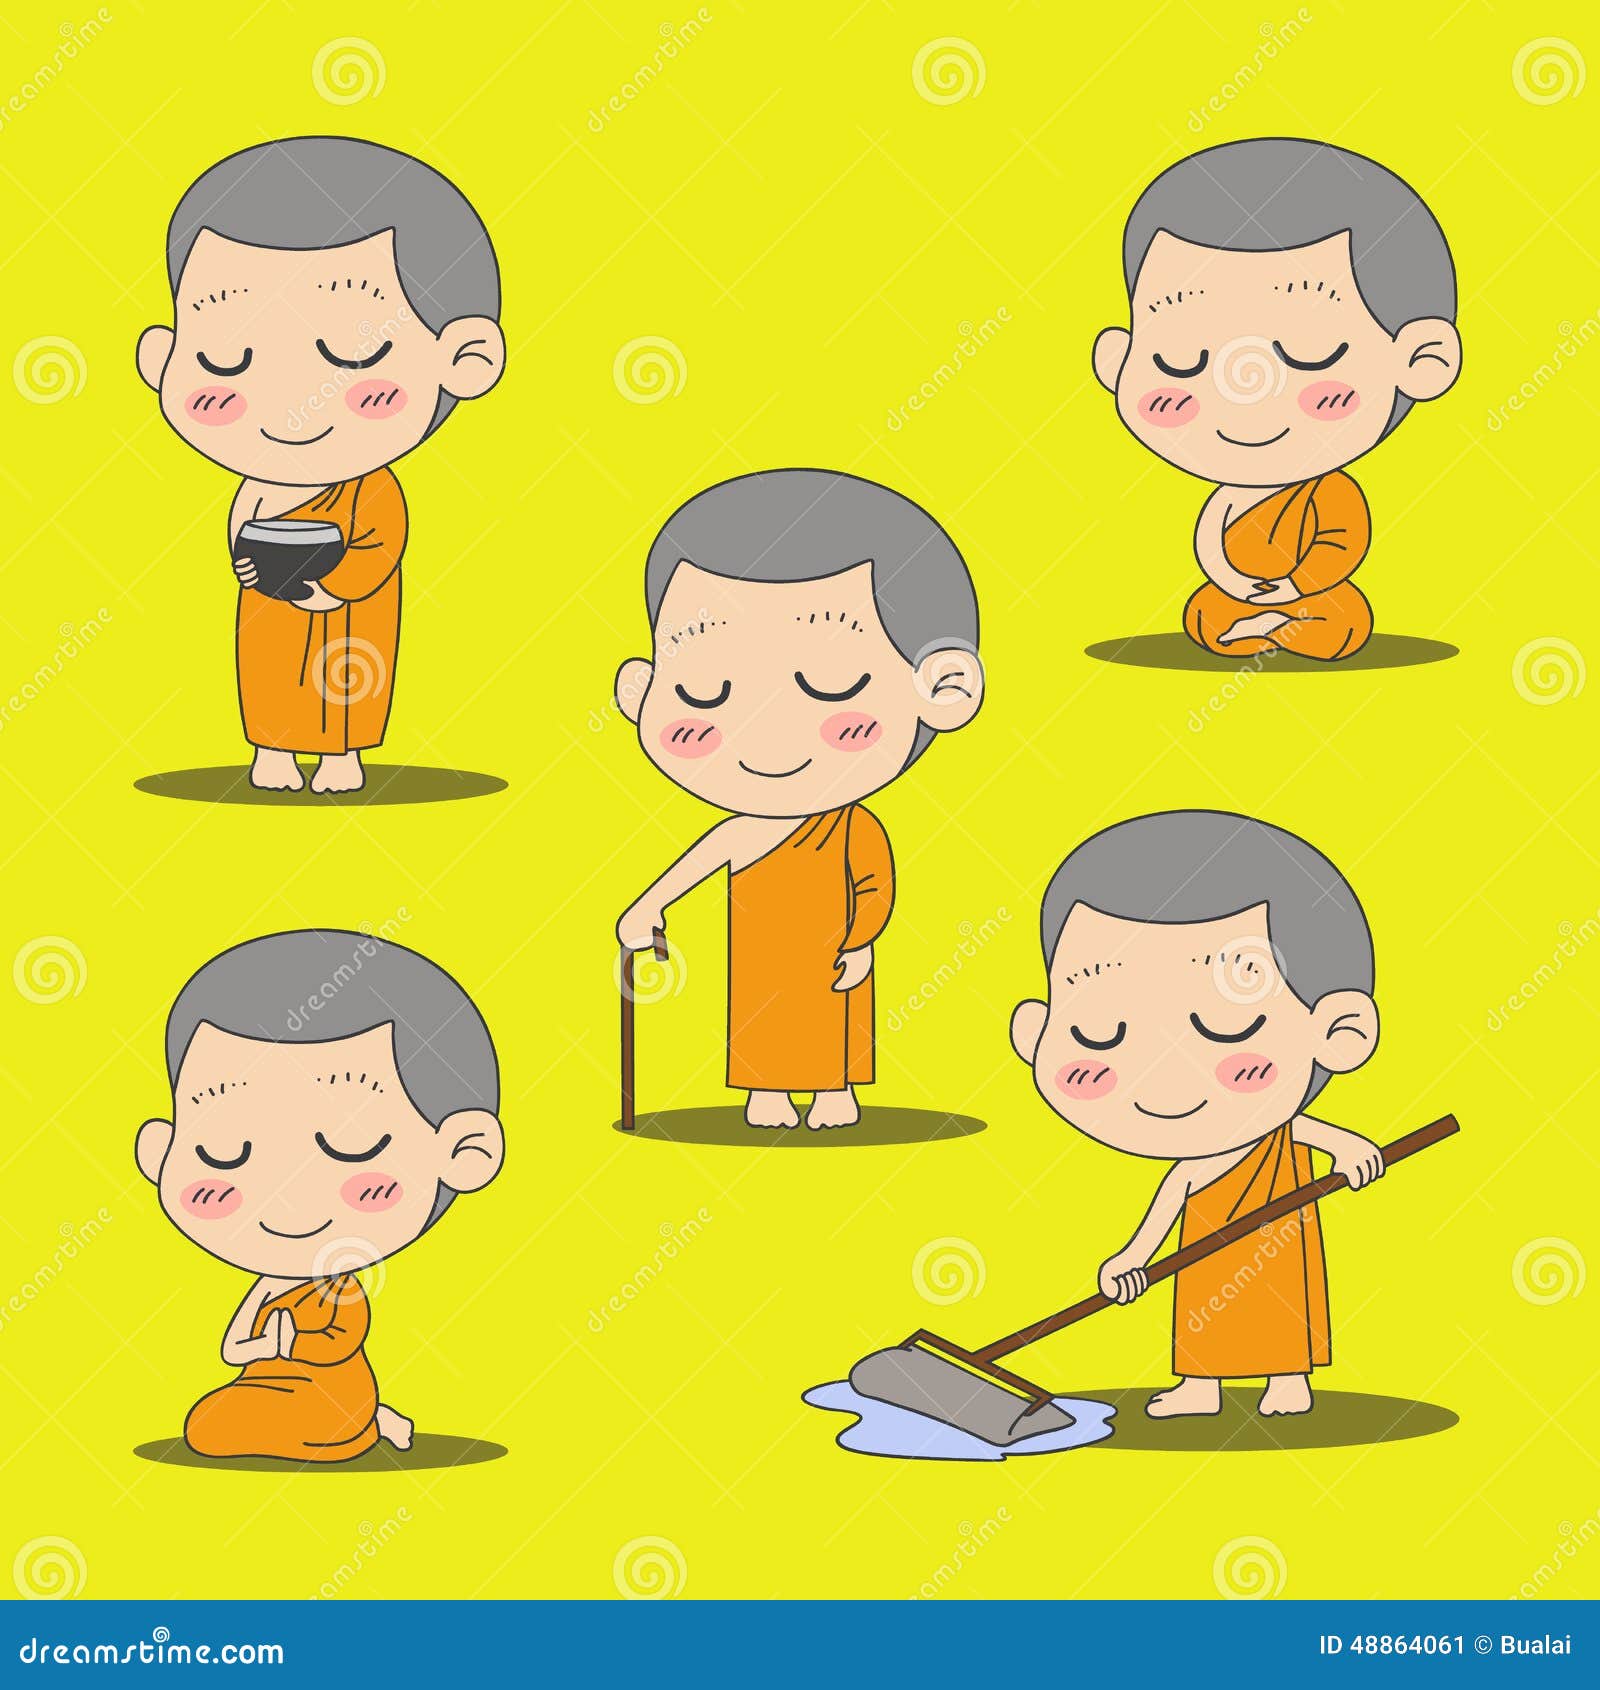 Monk cartoon stock vector. Illustration of buddhism, comic - 48864061